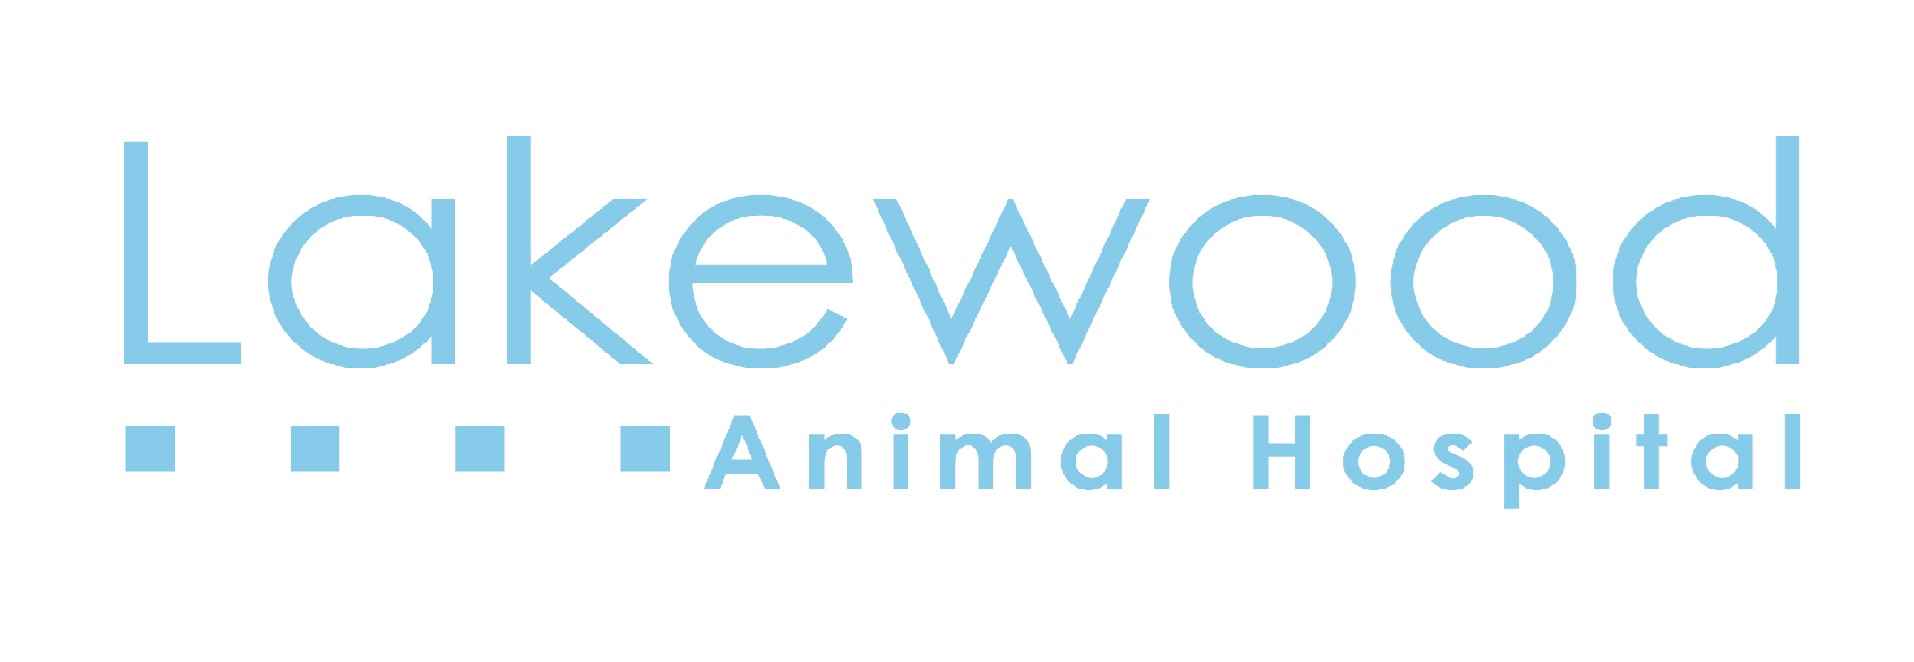 Lakewood Animal Hospital